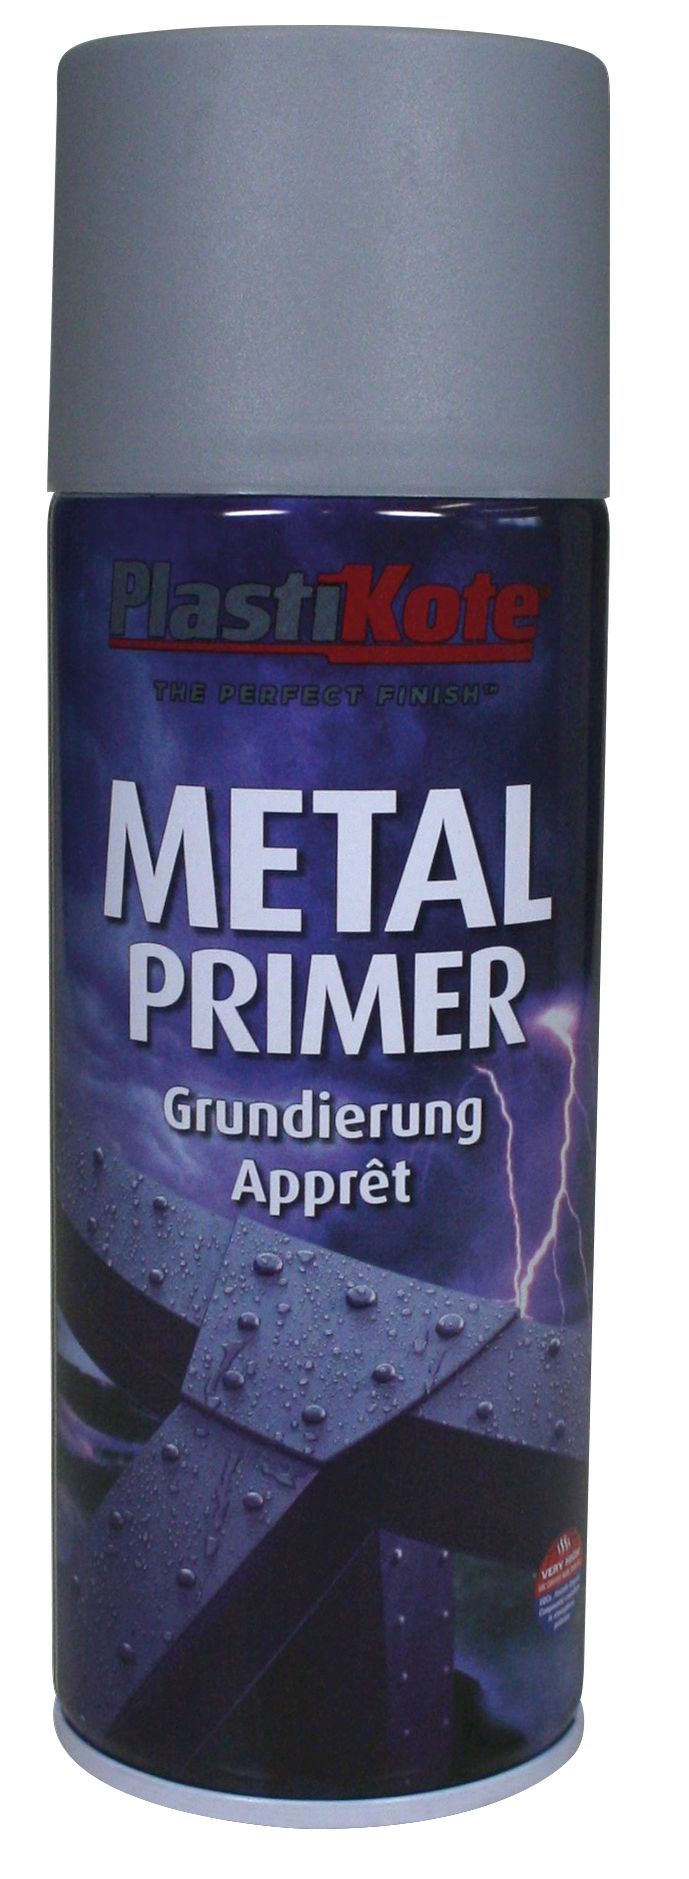 Plastikote Metal Primer Spray Paint - Grey - 400ml